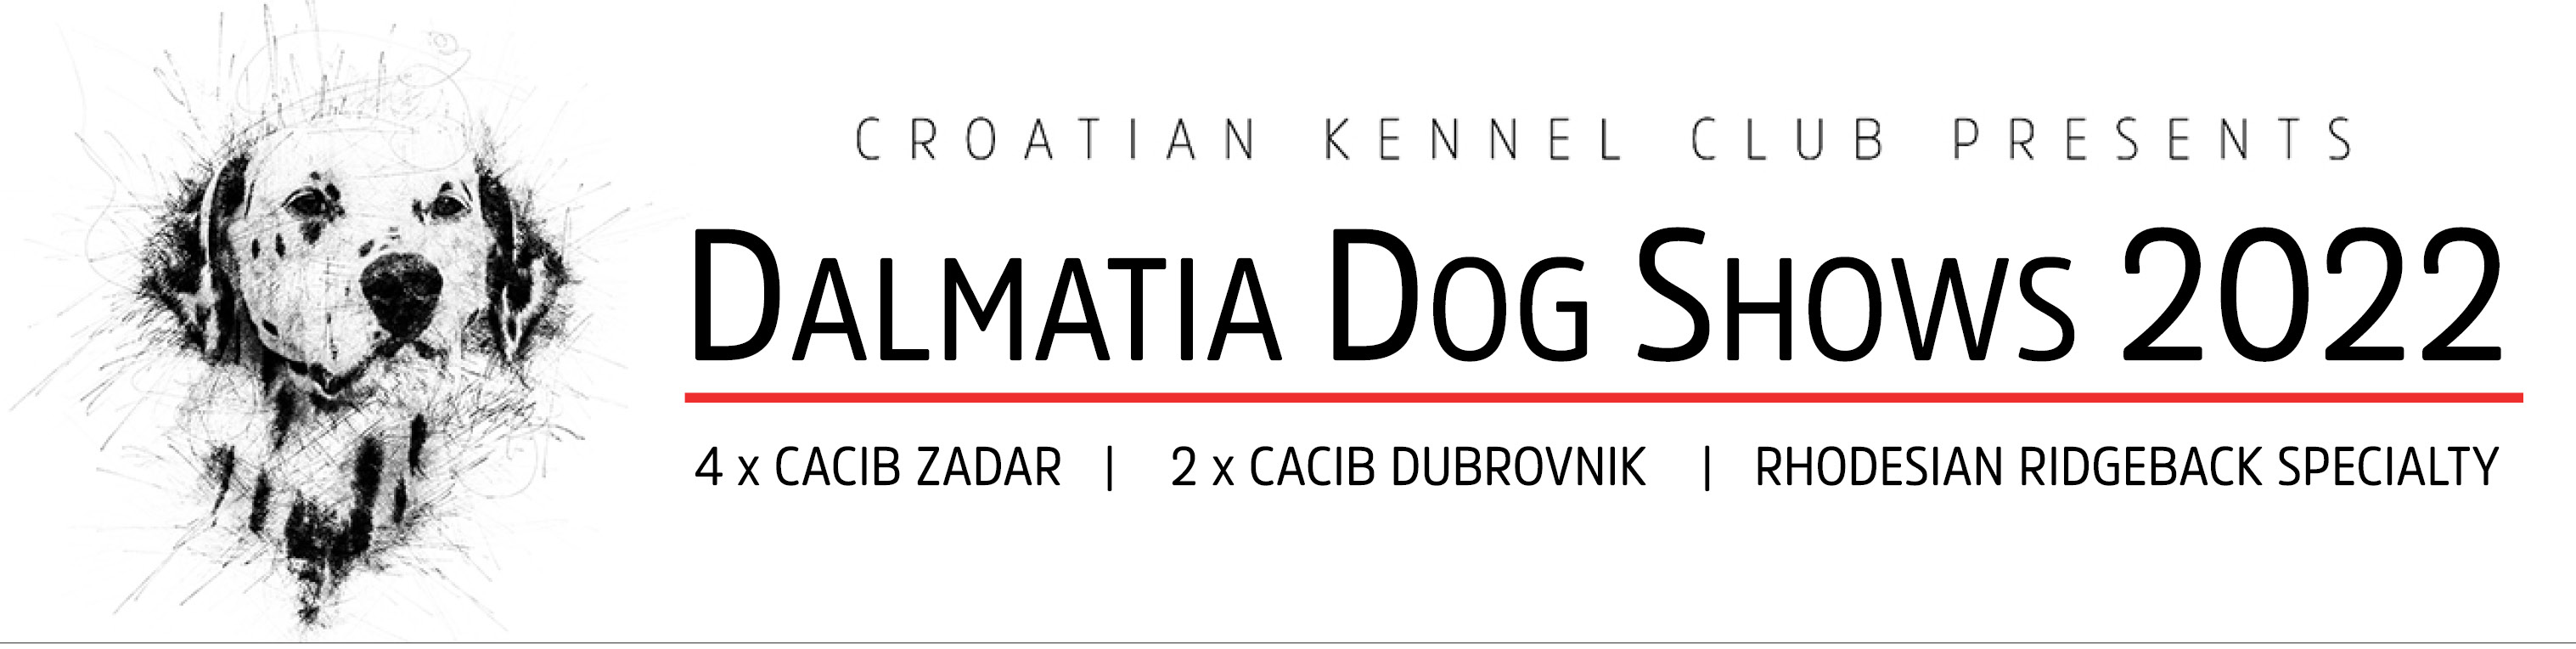 DALMATIA DOG SHOWS 2022